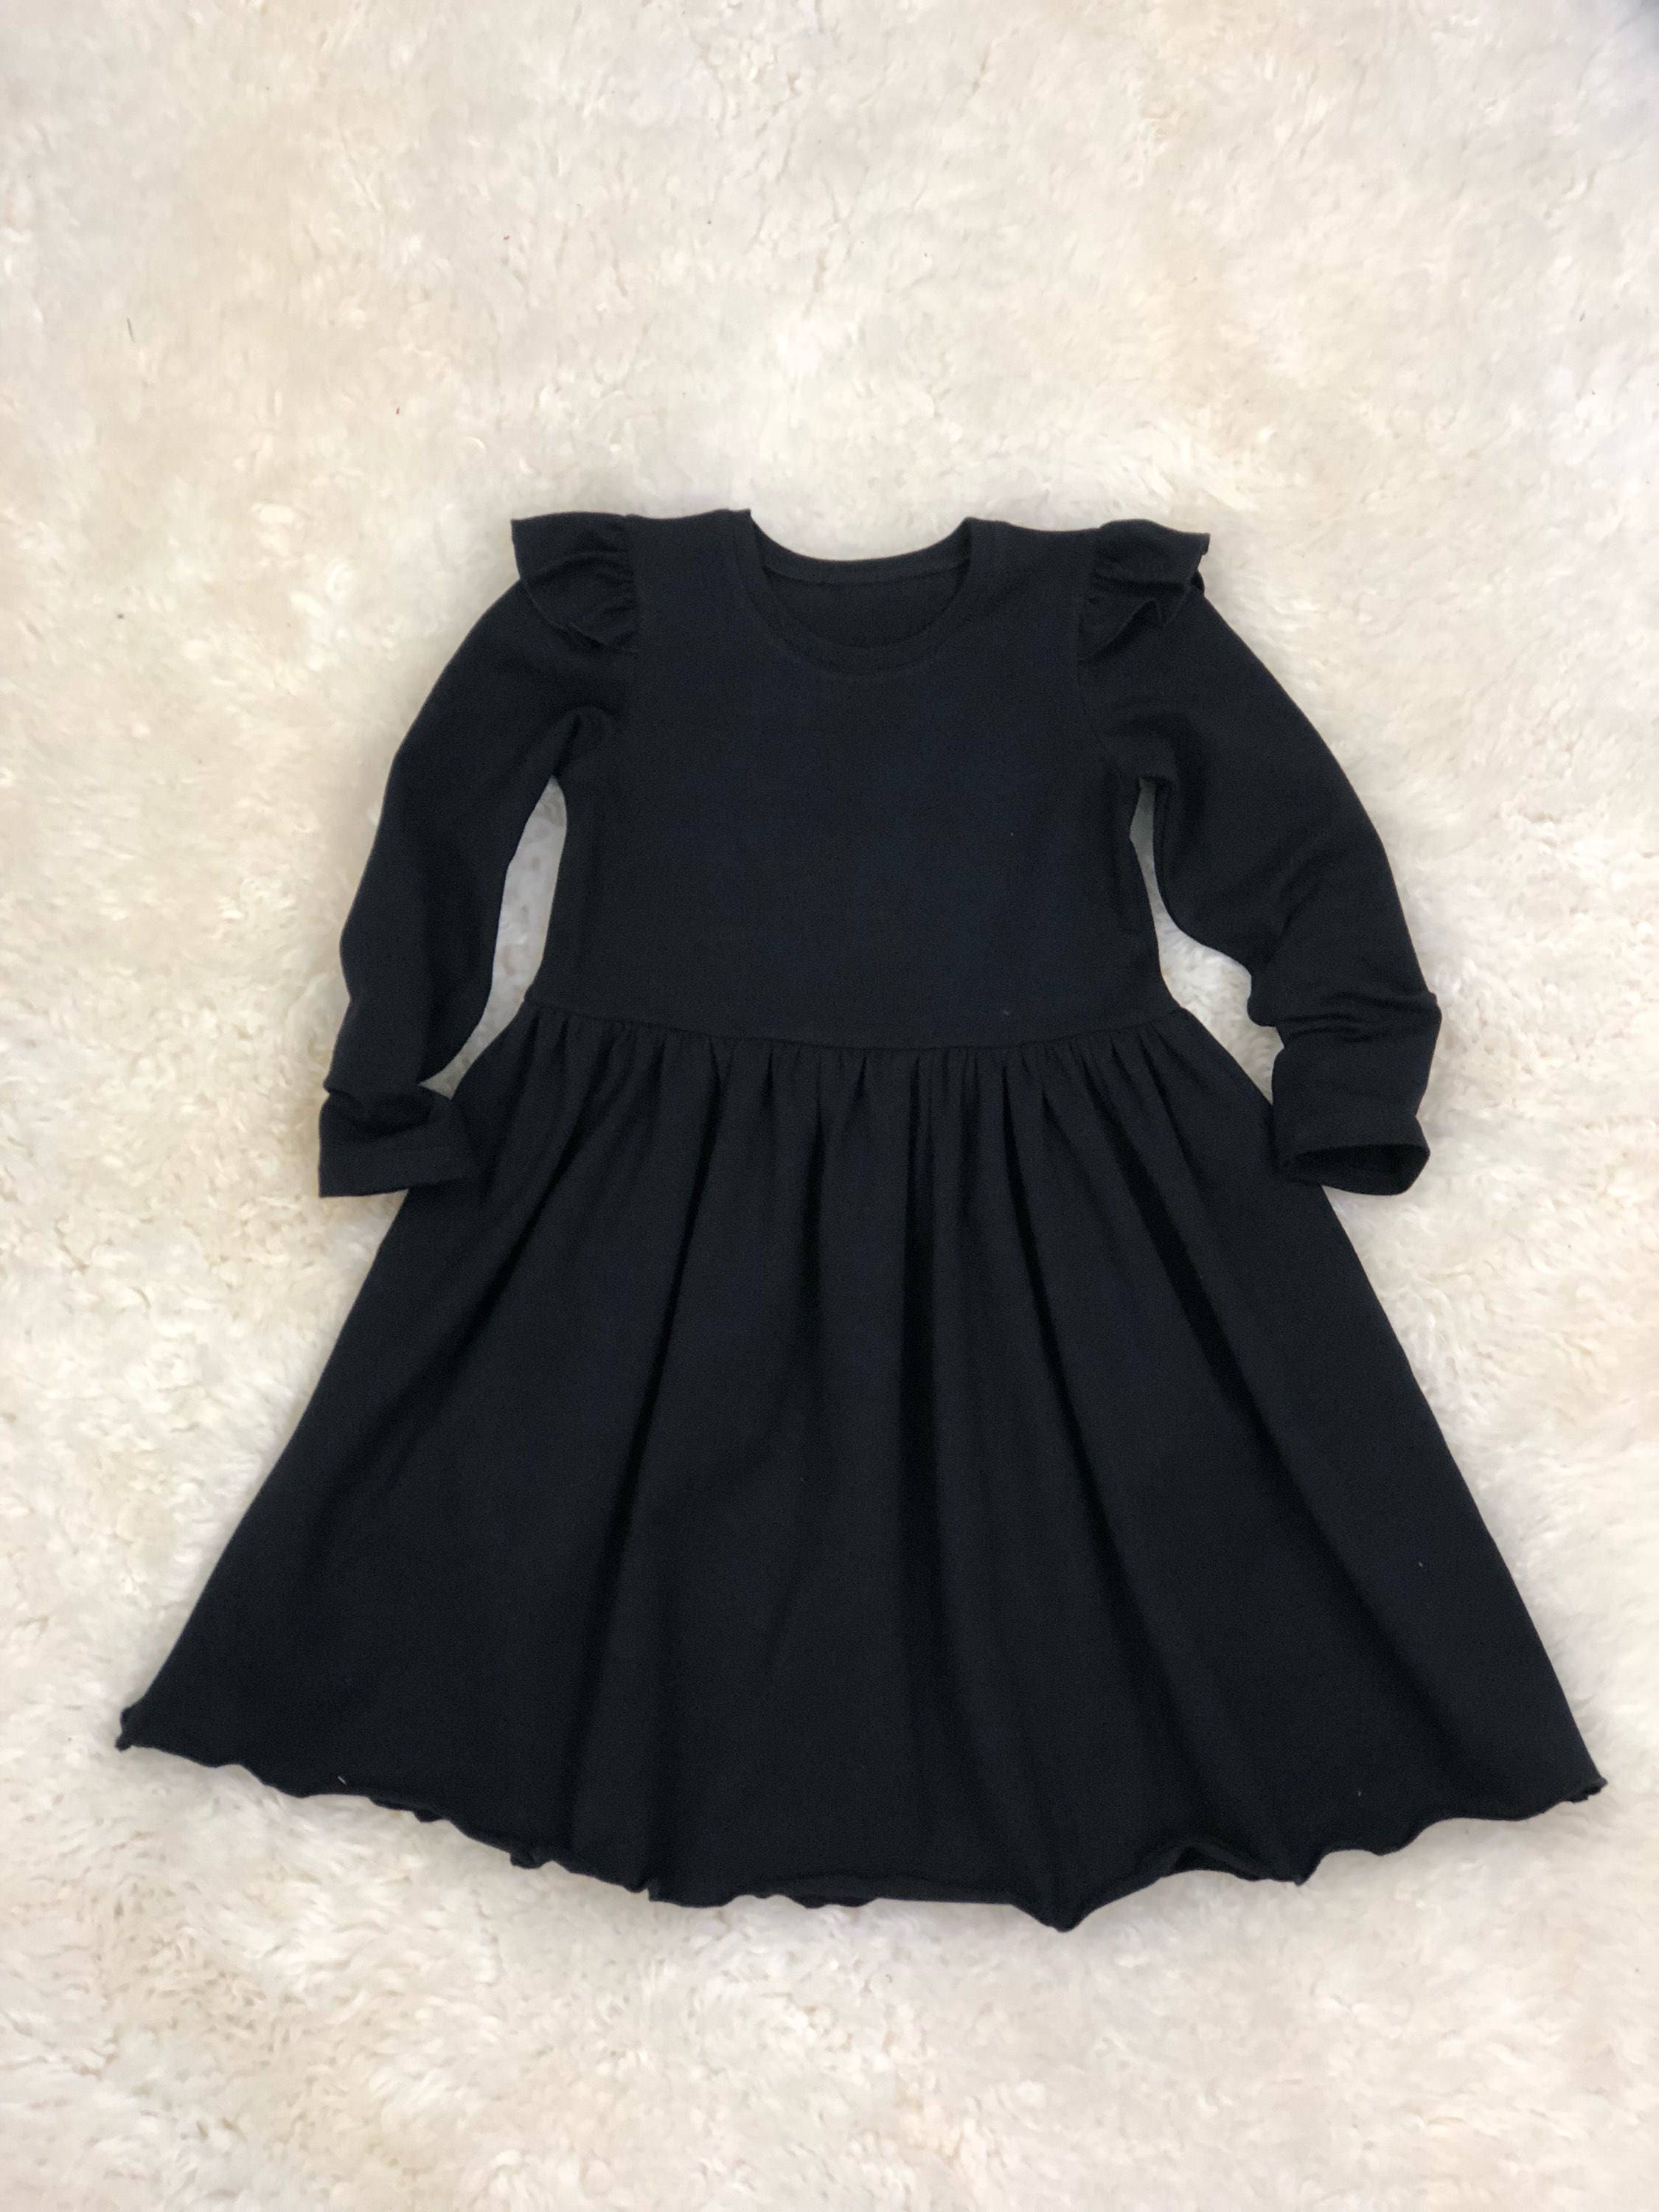 Aria knit long sleeve dress Easter toddler dress girls | Etsy